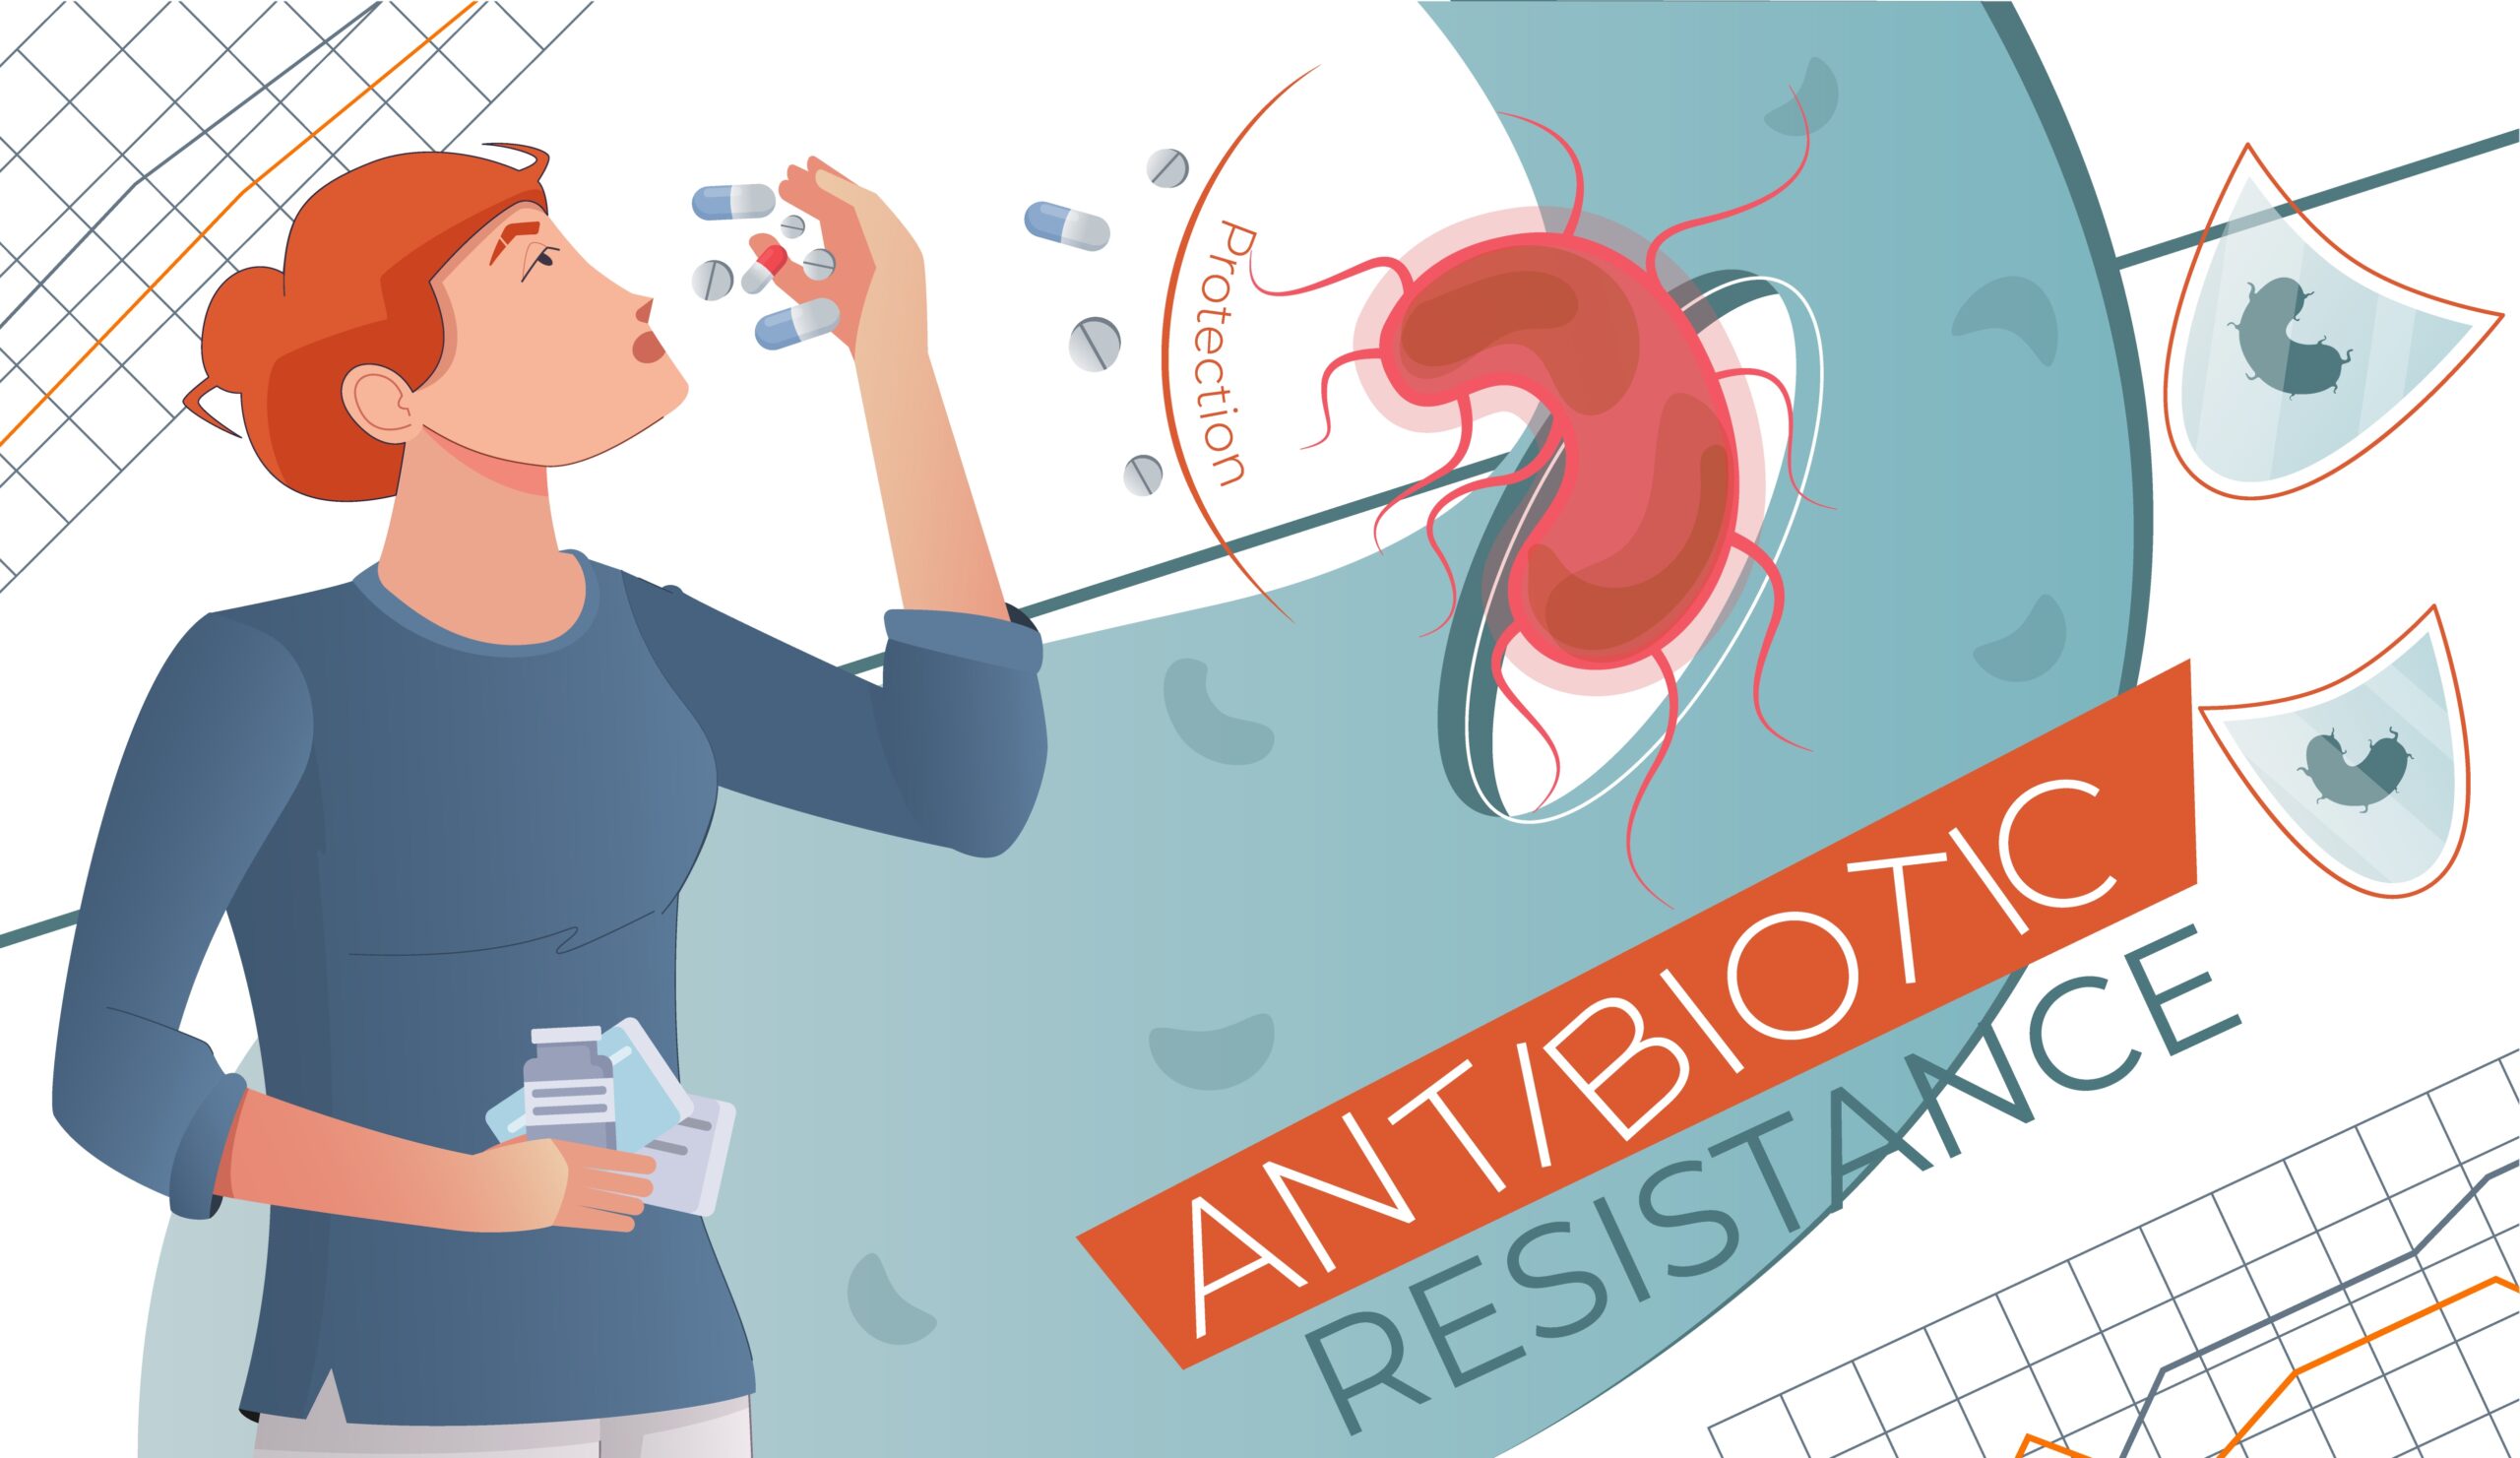 Anti-microbial resistance